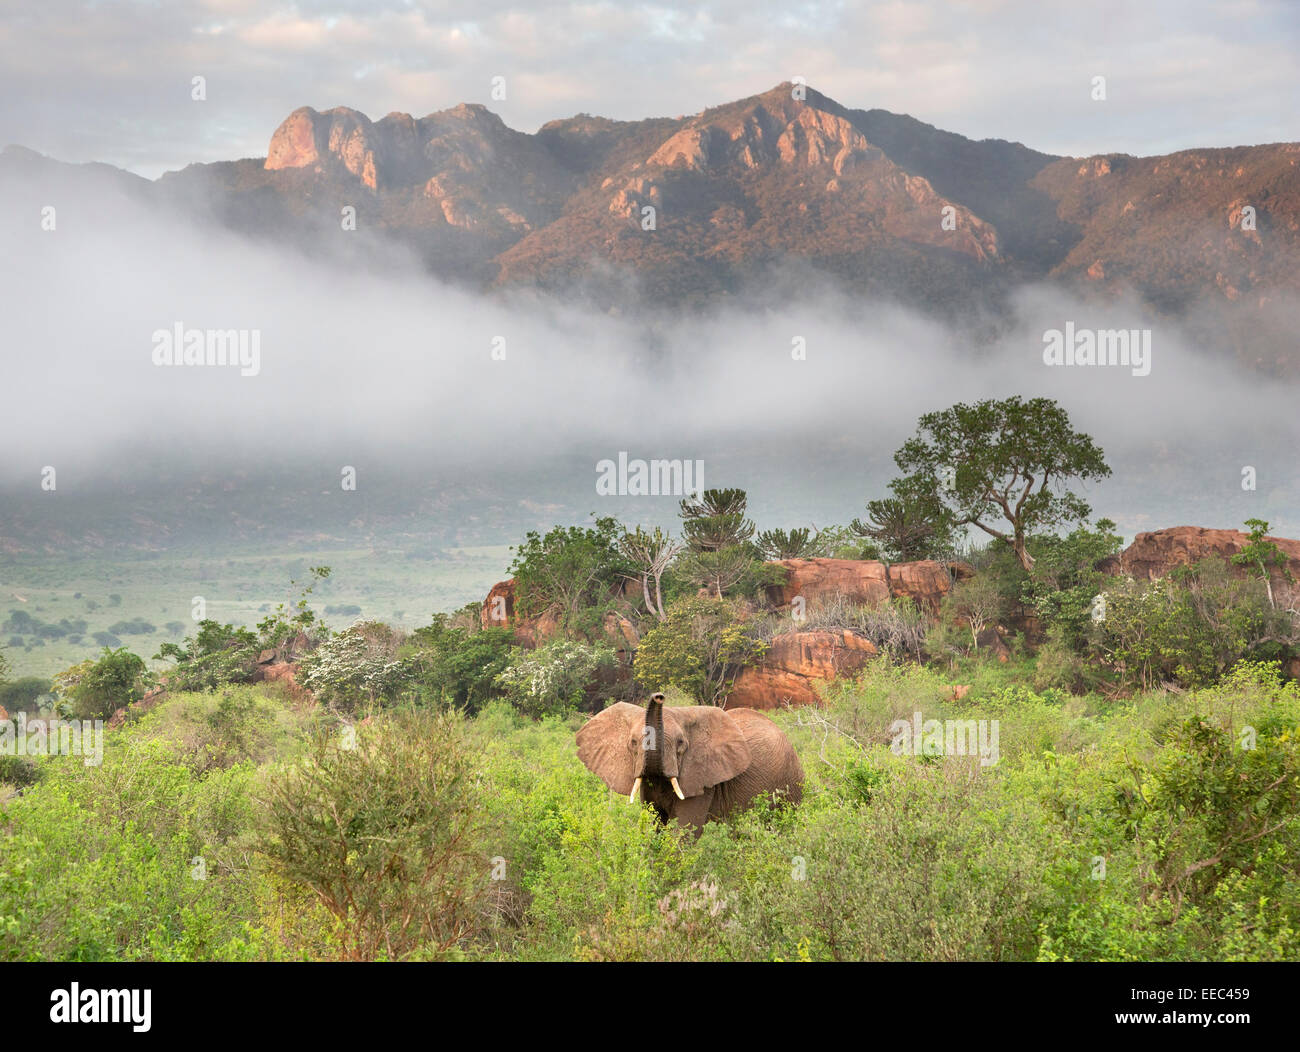 Elephant in the beautiful scenery of Tsavo West National Park, Kenya Stock Photo